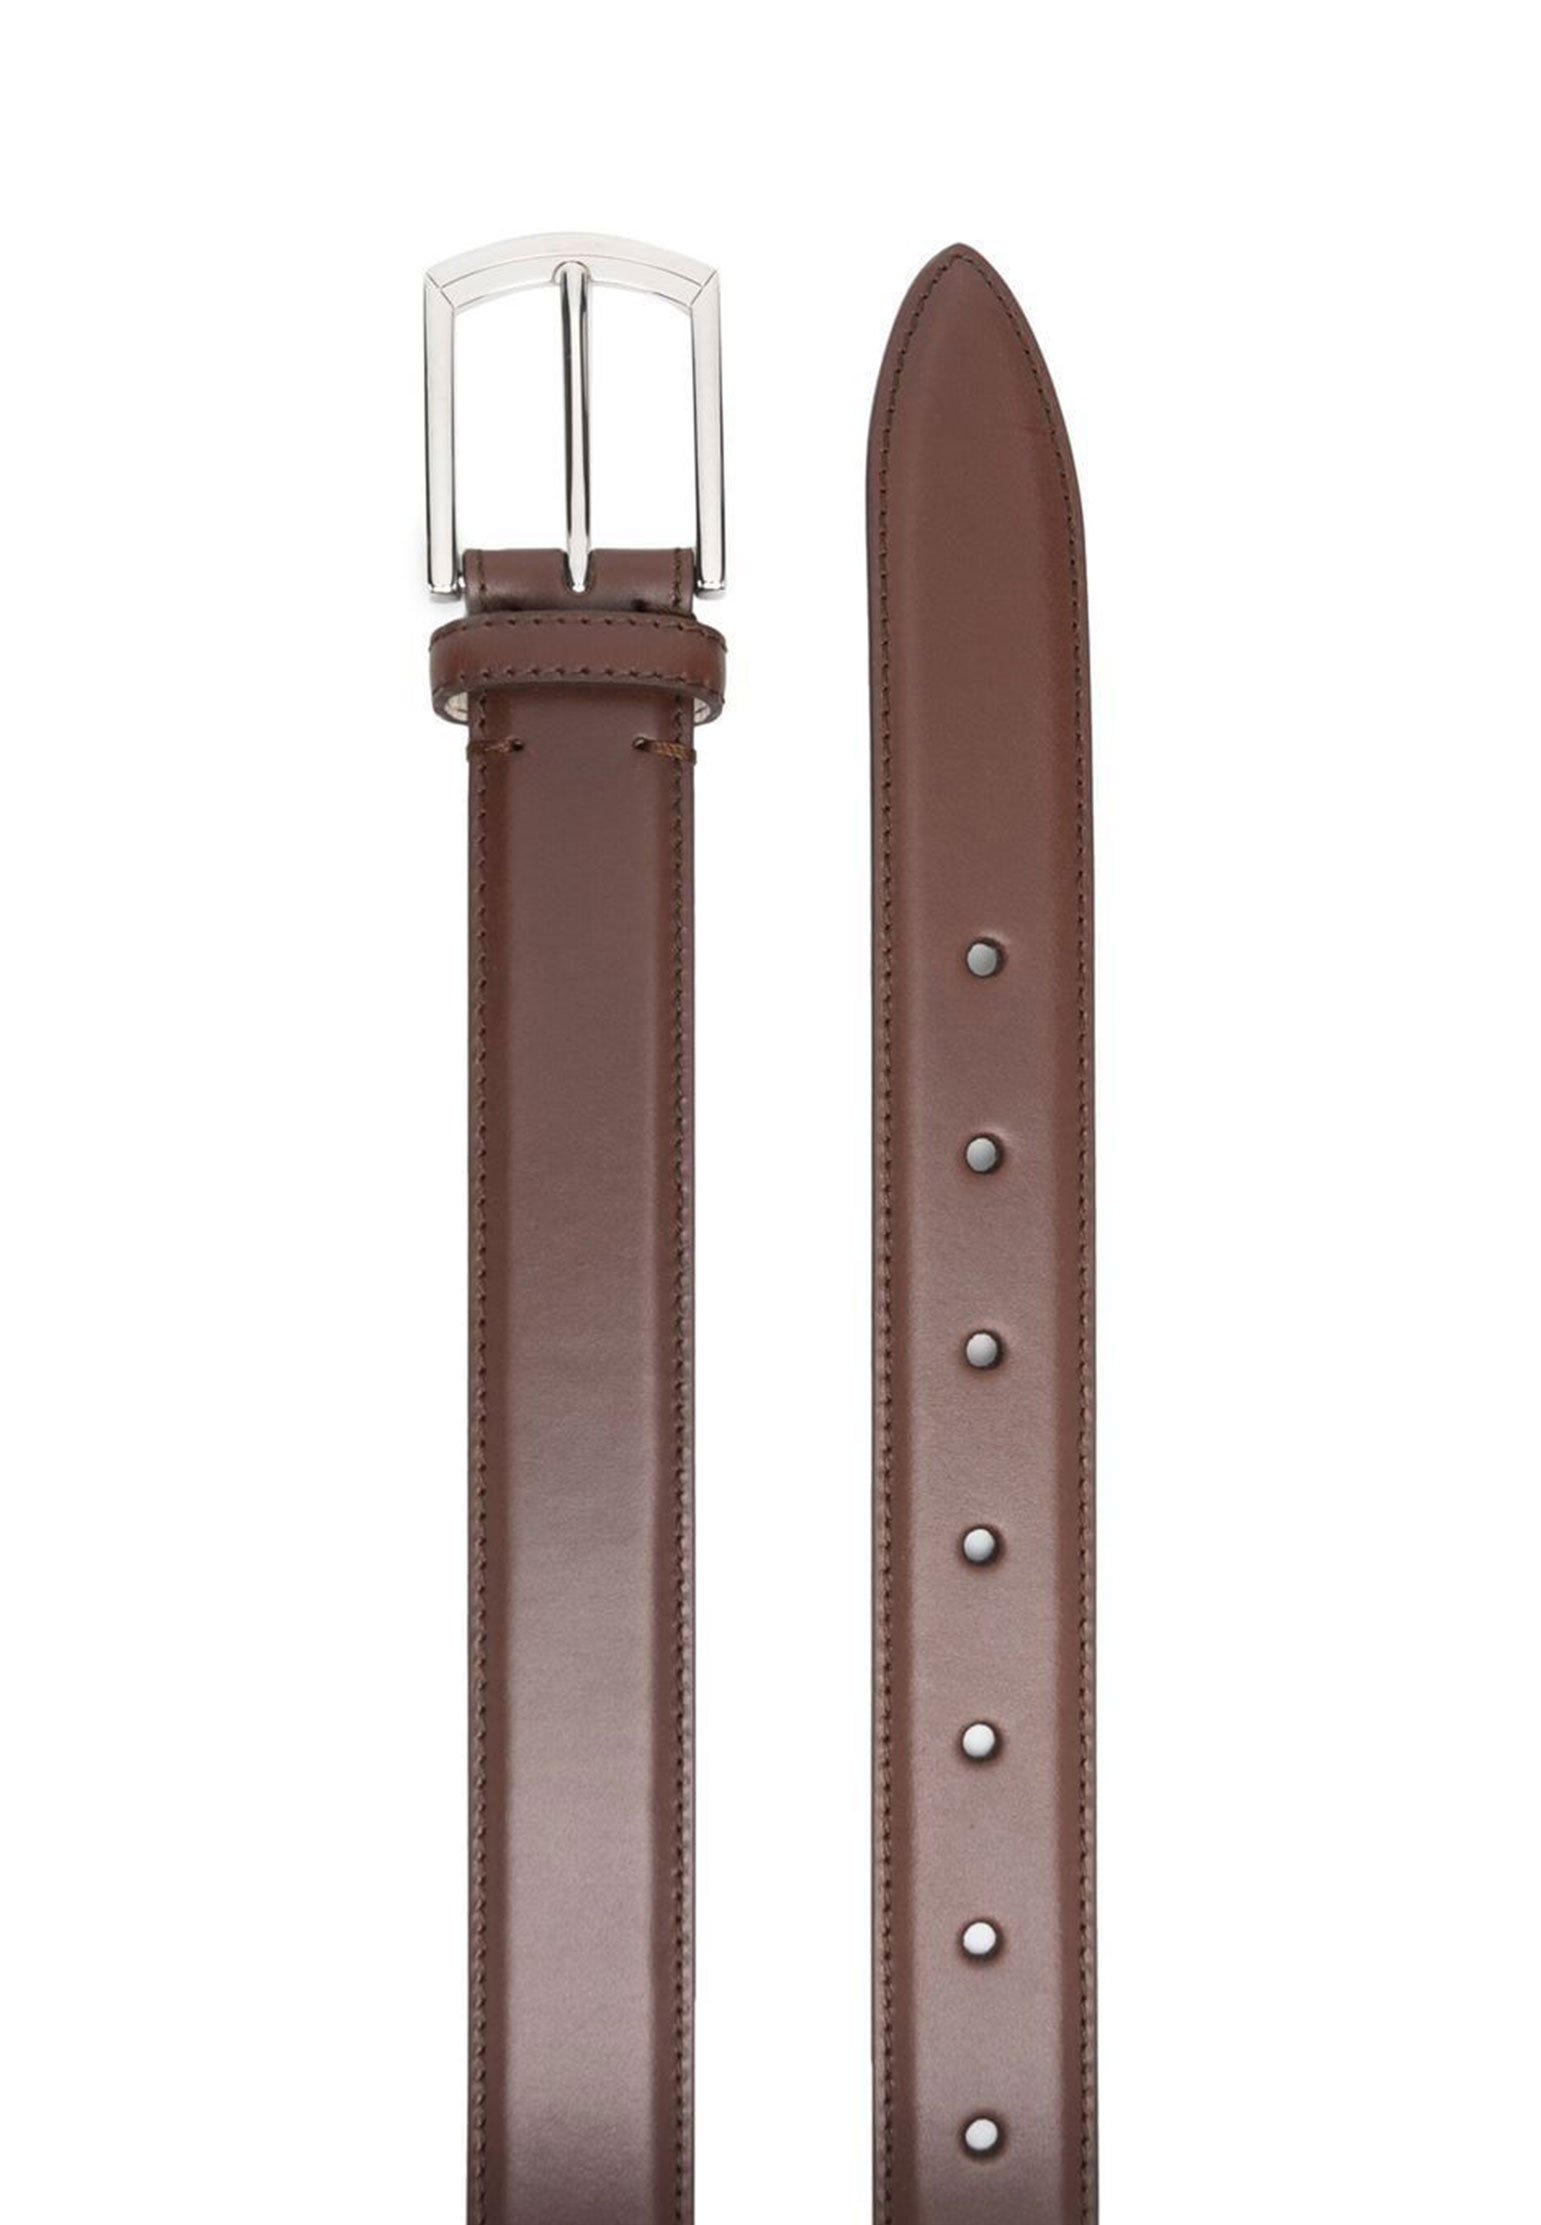 Belt BRUNELLO CUCINELLI Color: brown (Code: 1523) in online store Allure